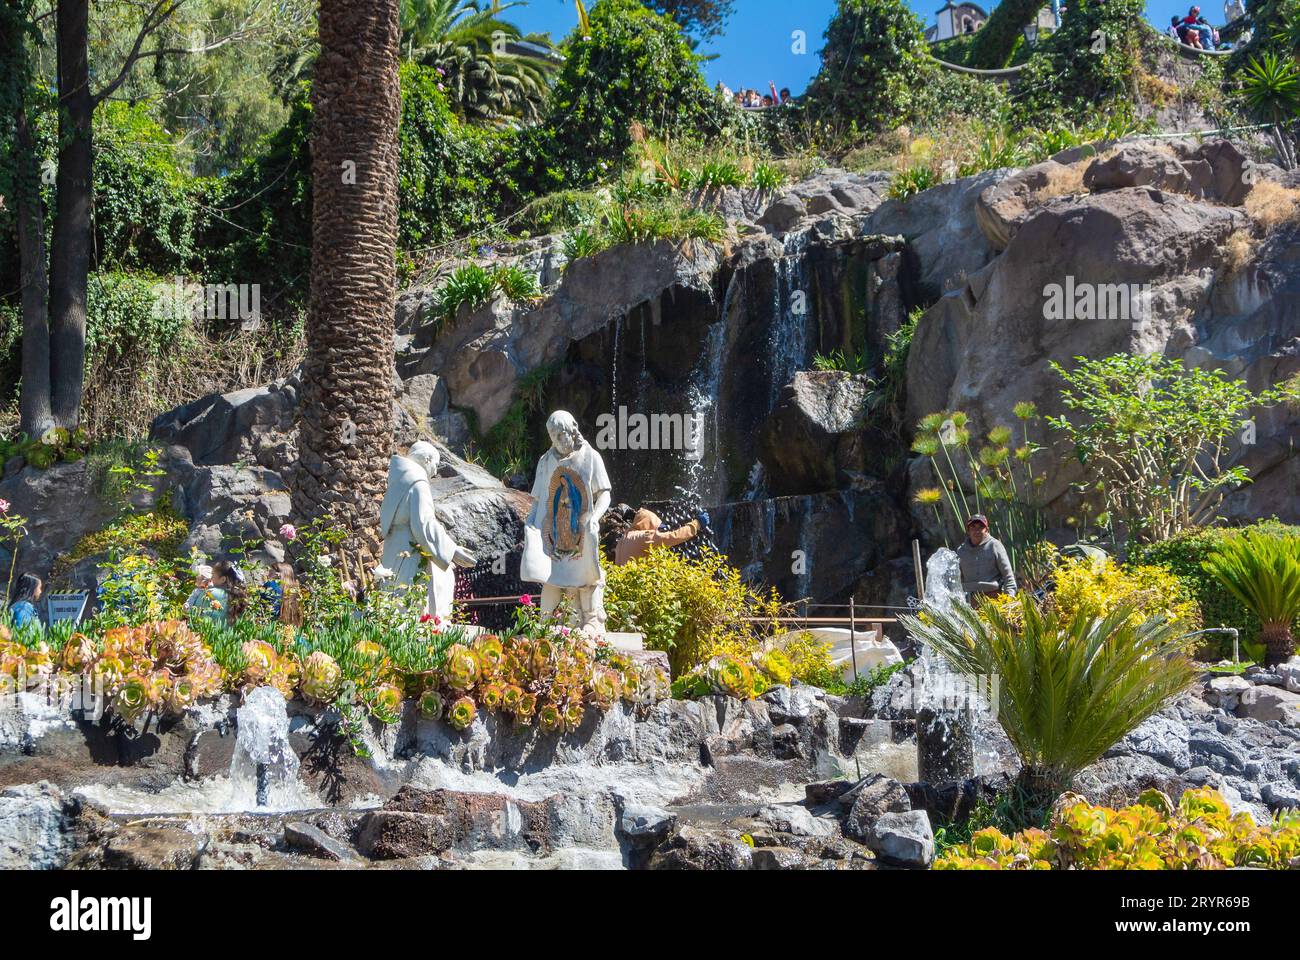 Mexico, CDMX, Mexique, Un jardin fleuri à Basílica de Nuestra Señora de Guadalupe. Editorial uniquement. Banque D'Images